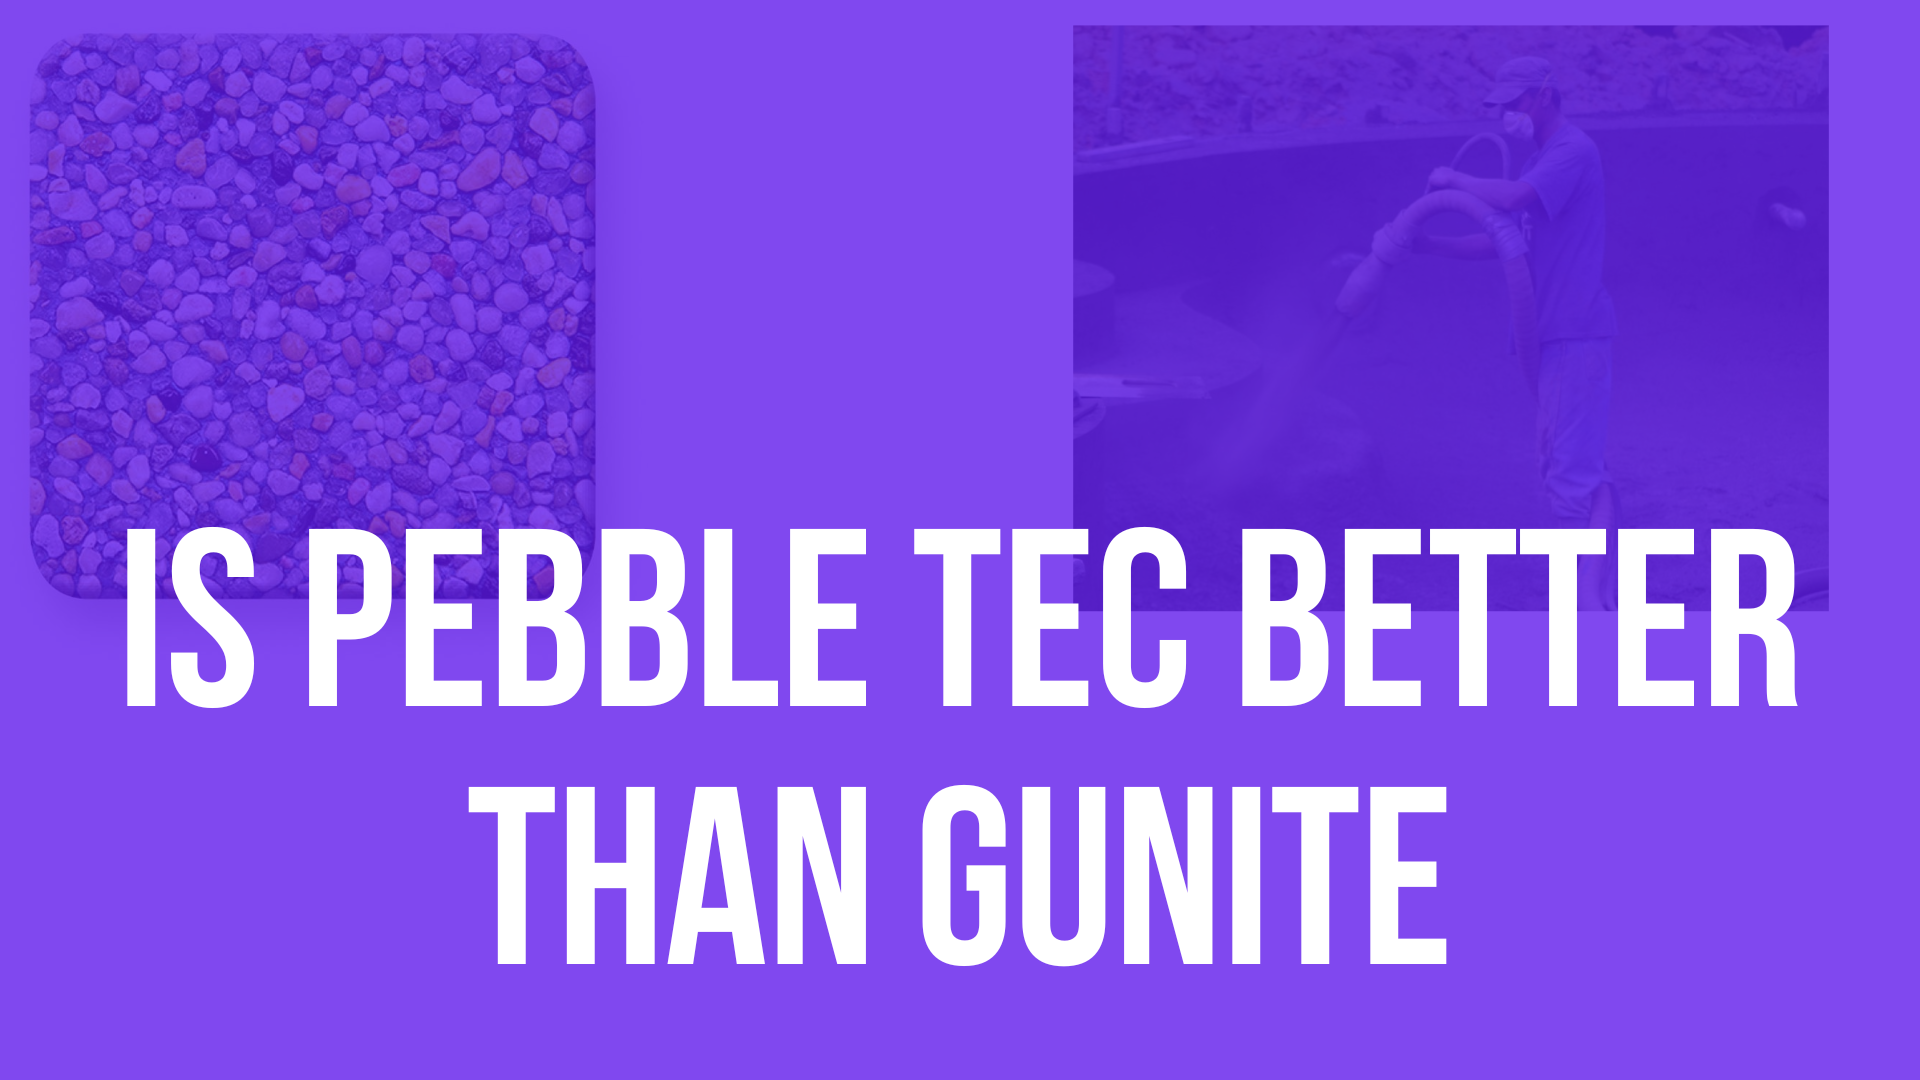 Is pebble tec better than gunite